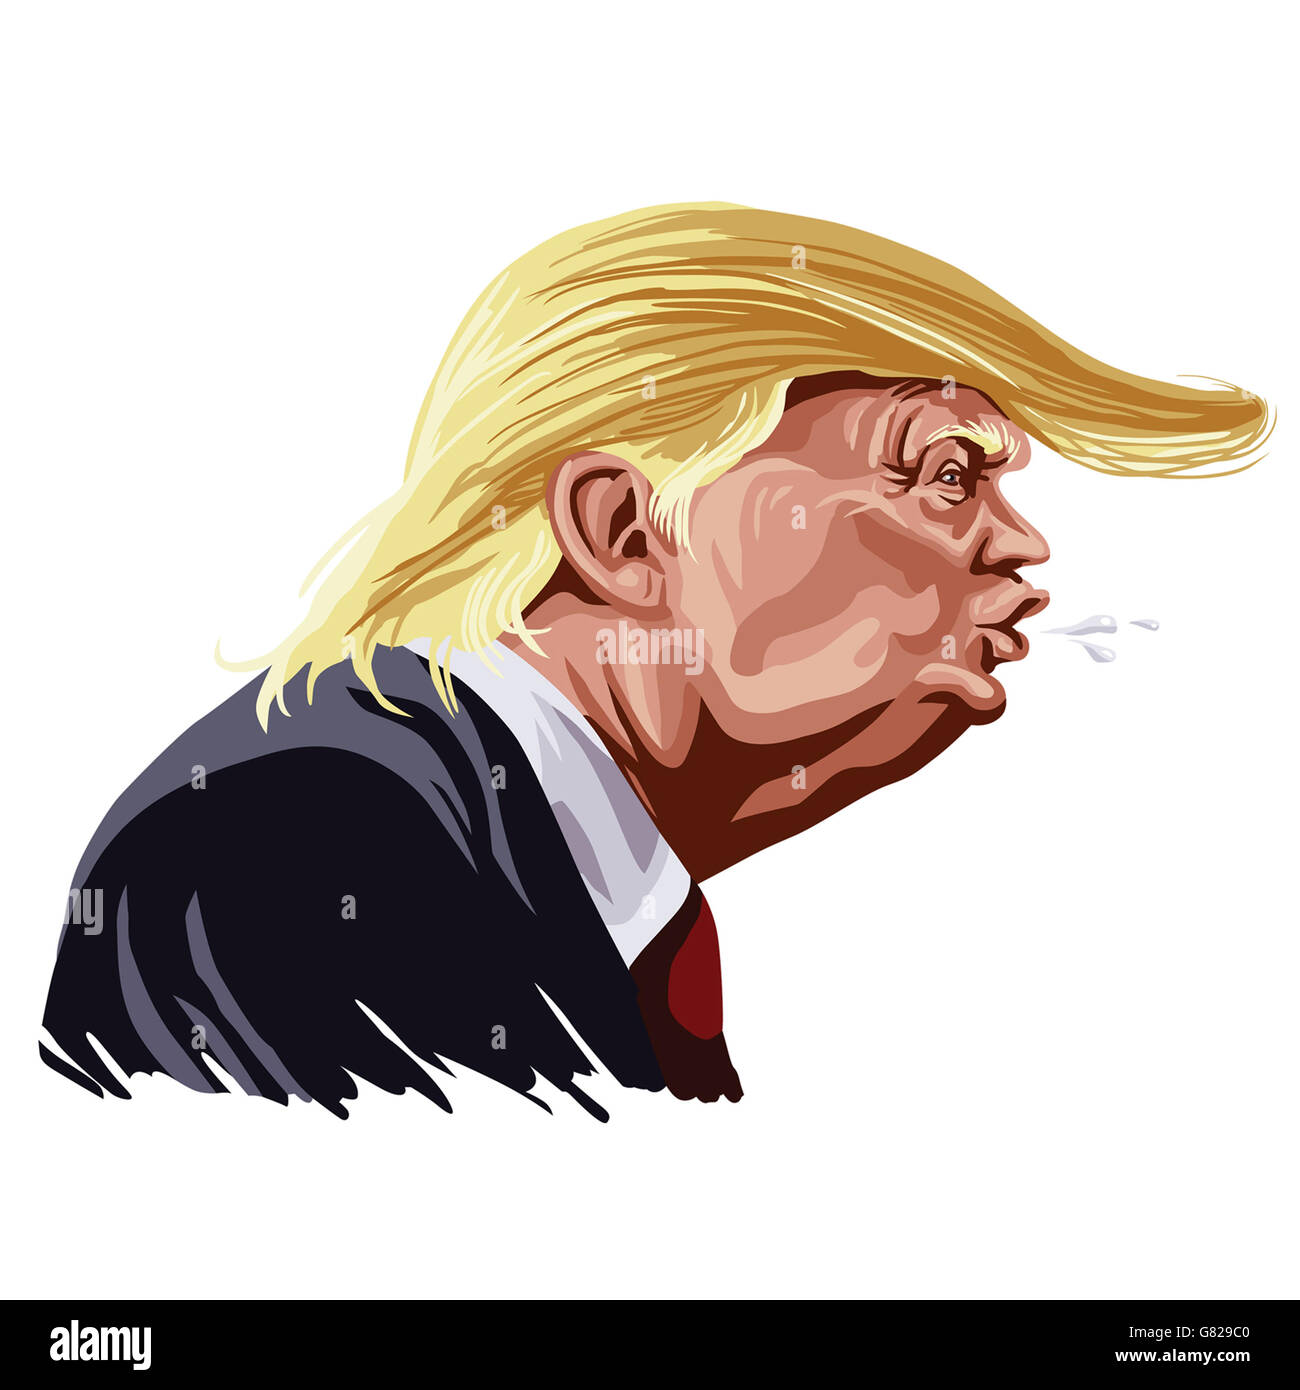 Trump cartoon hi-res stock photography and images - Alamy